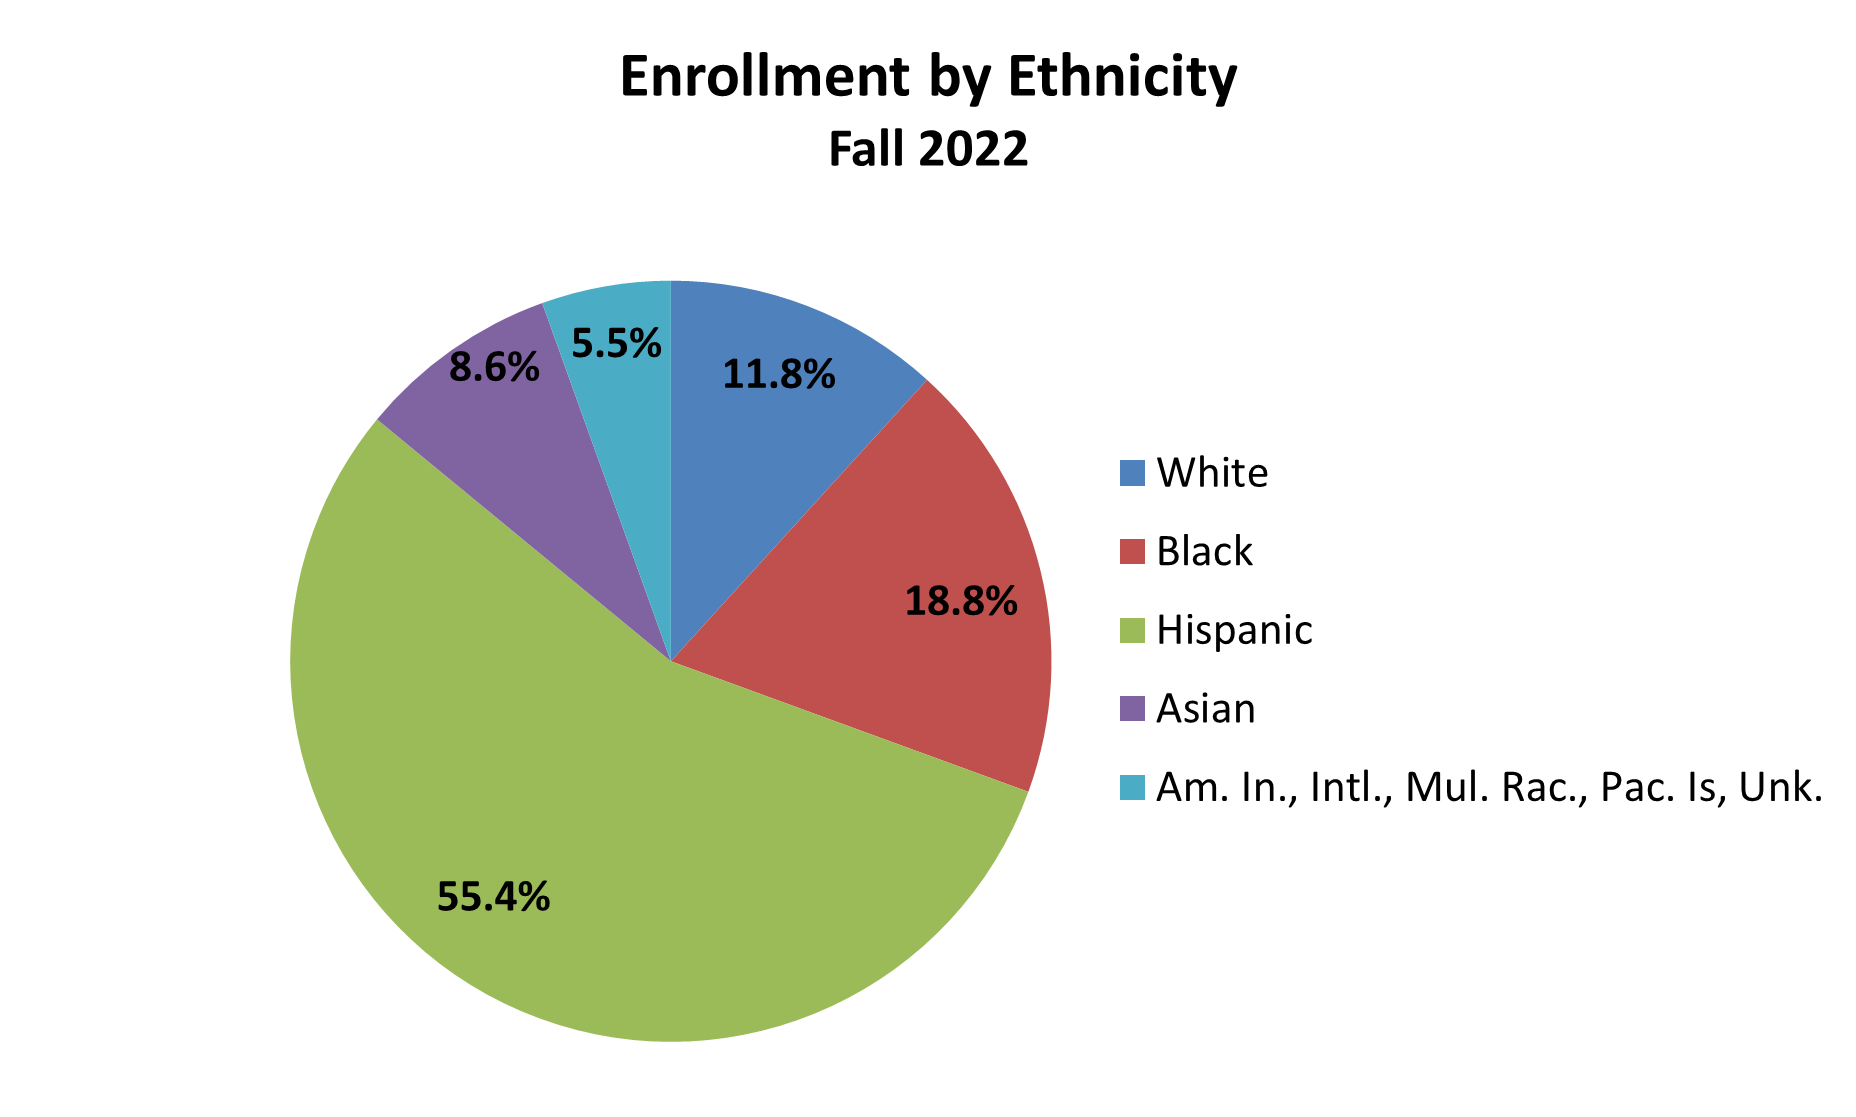 Enrollment by ethnicity pie chart